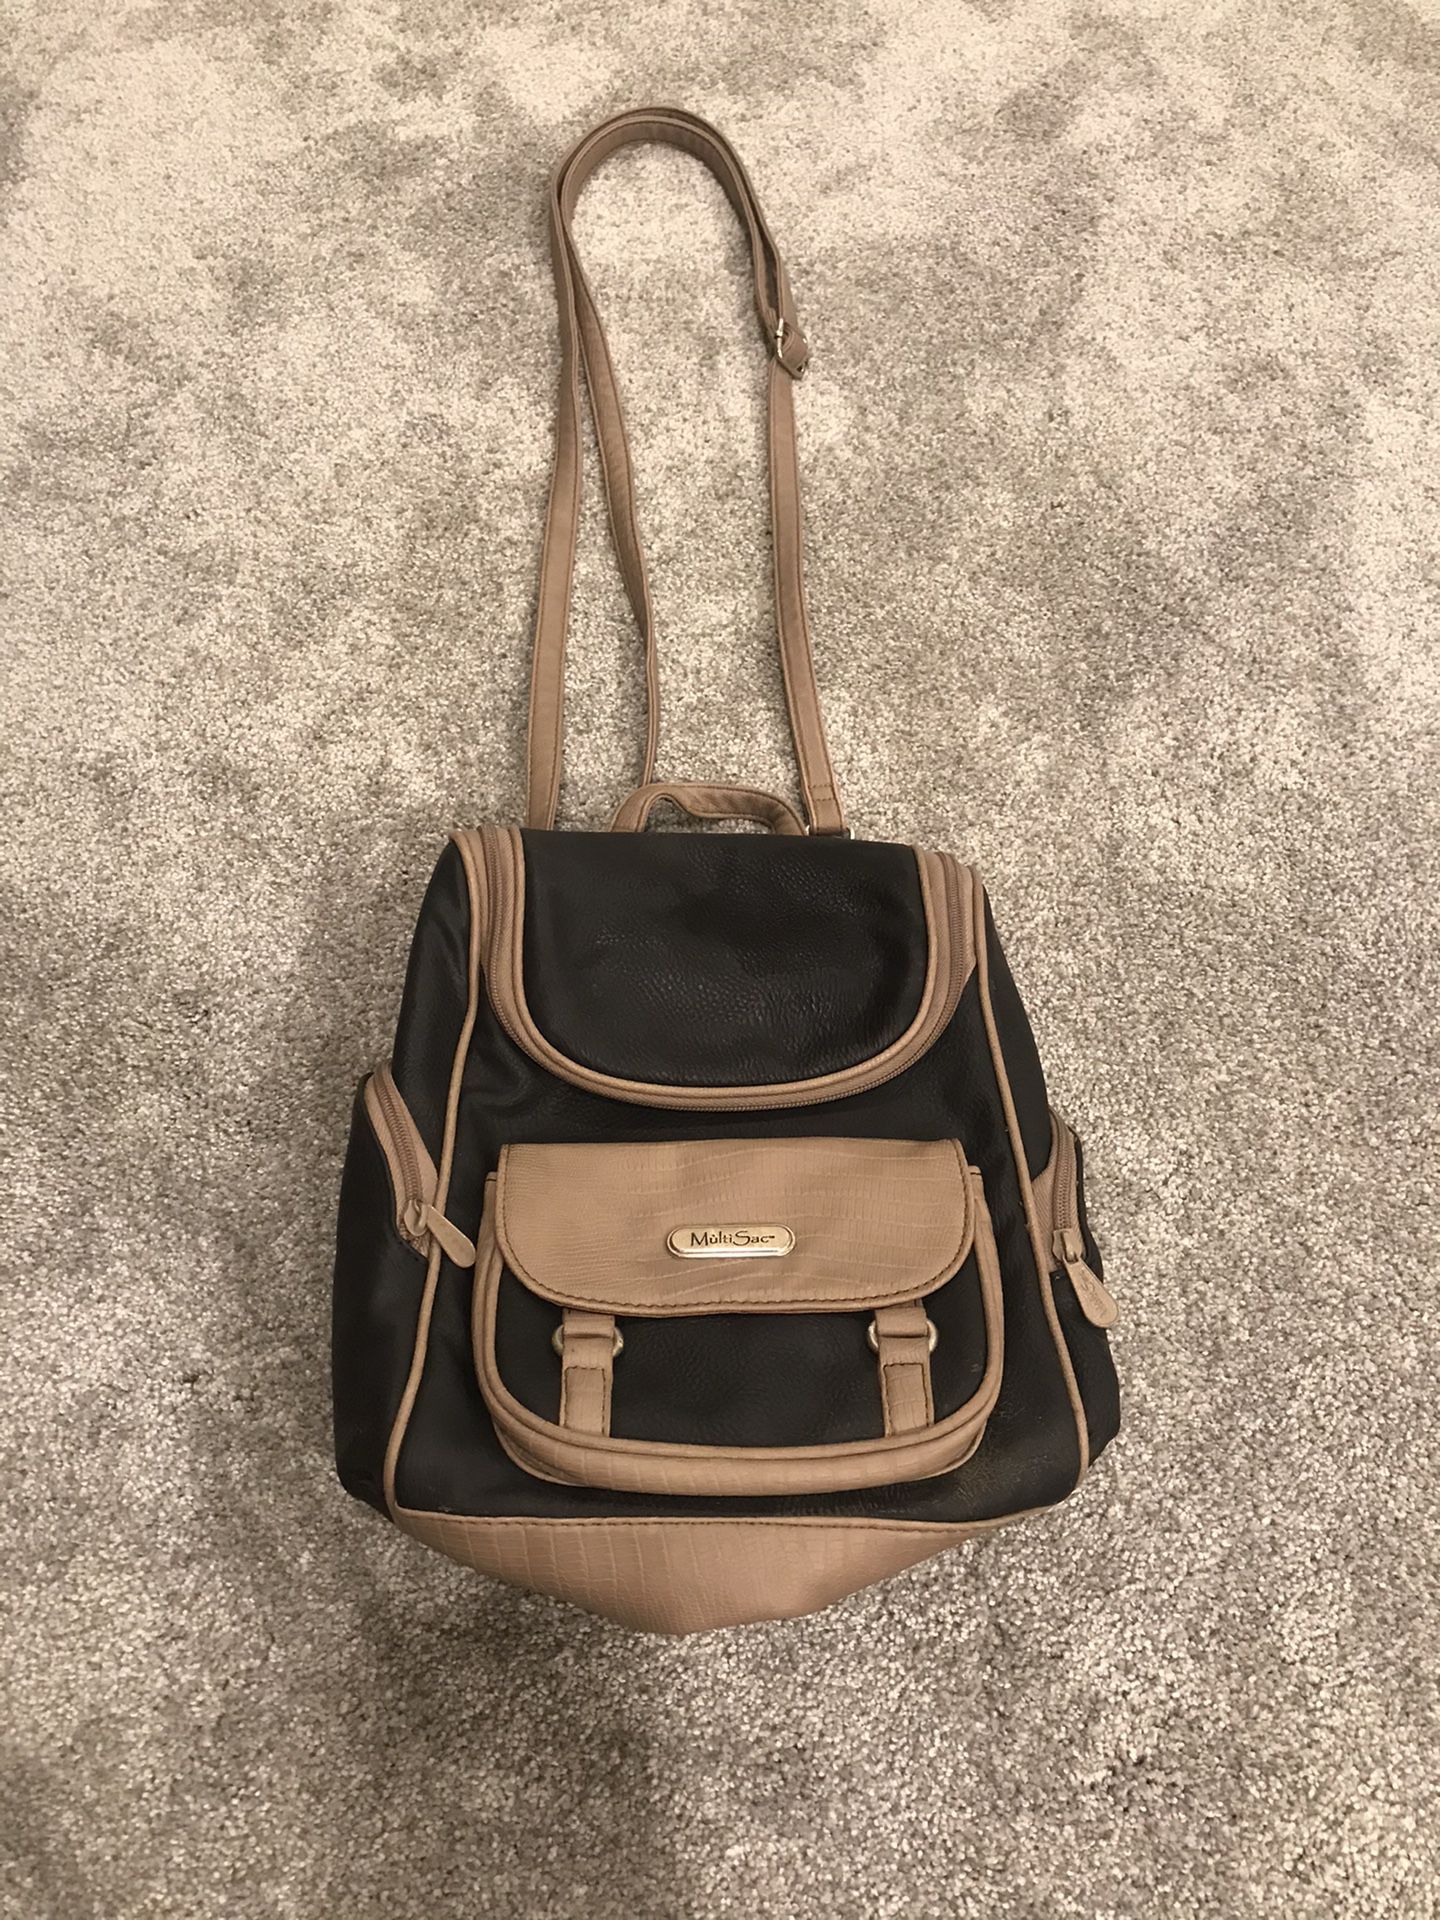 Black & Tan Convertible Backpack Purse